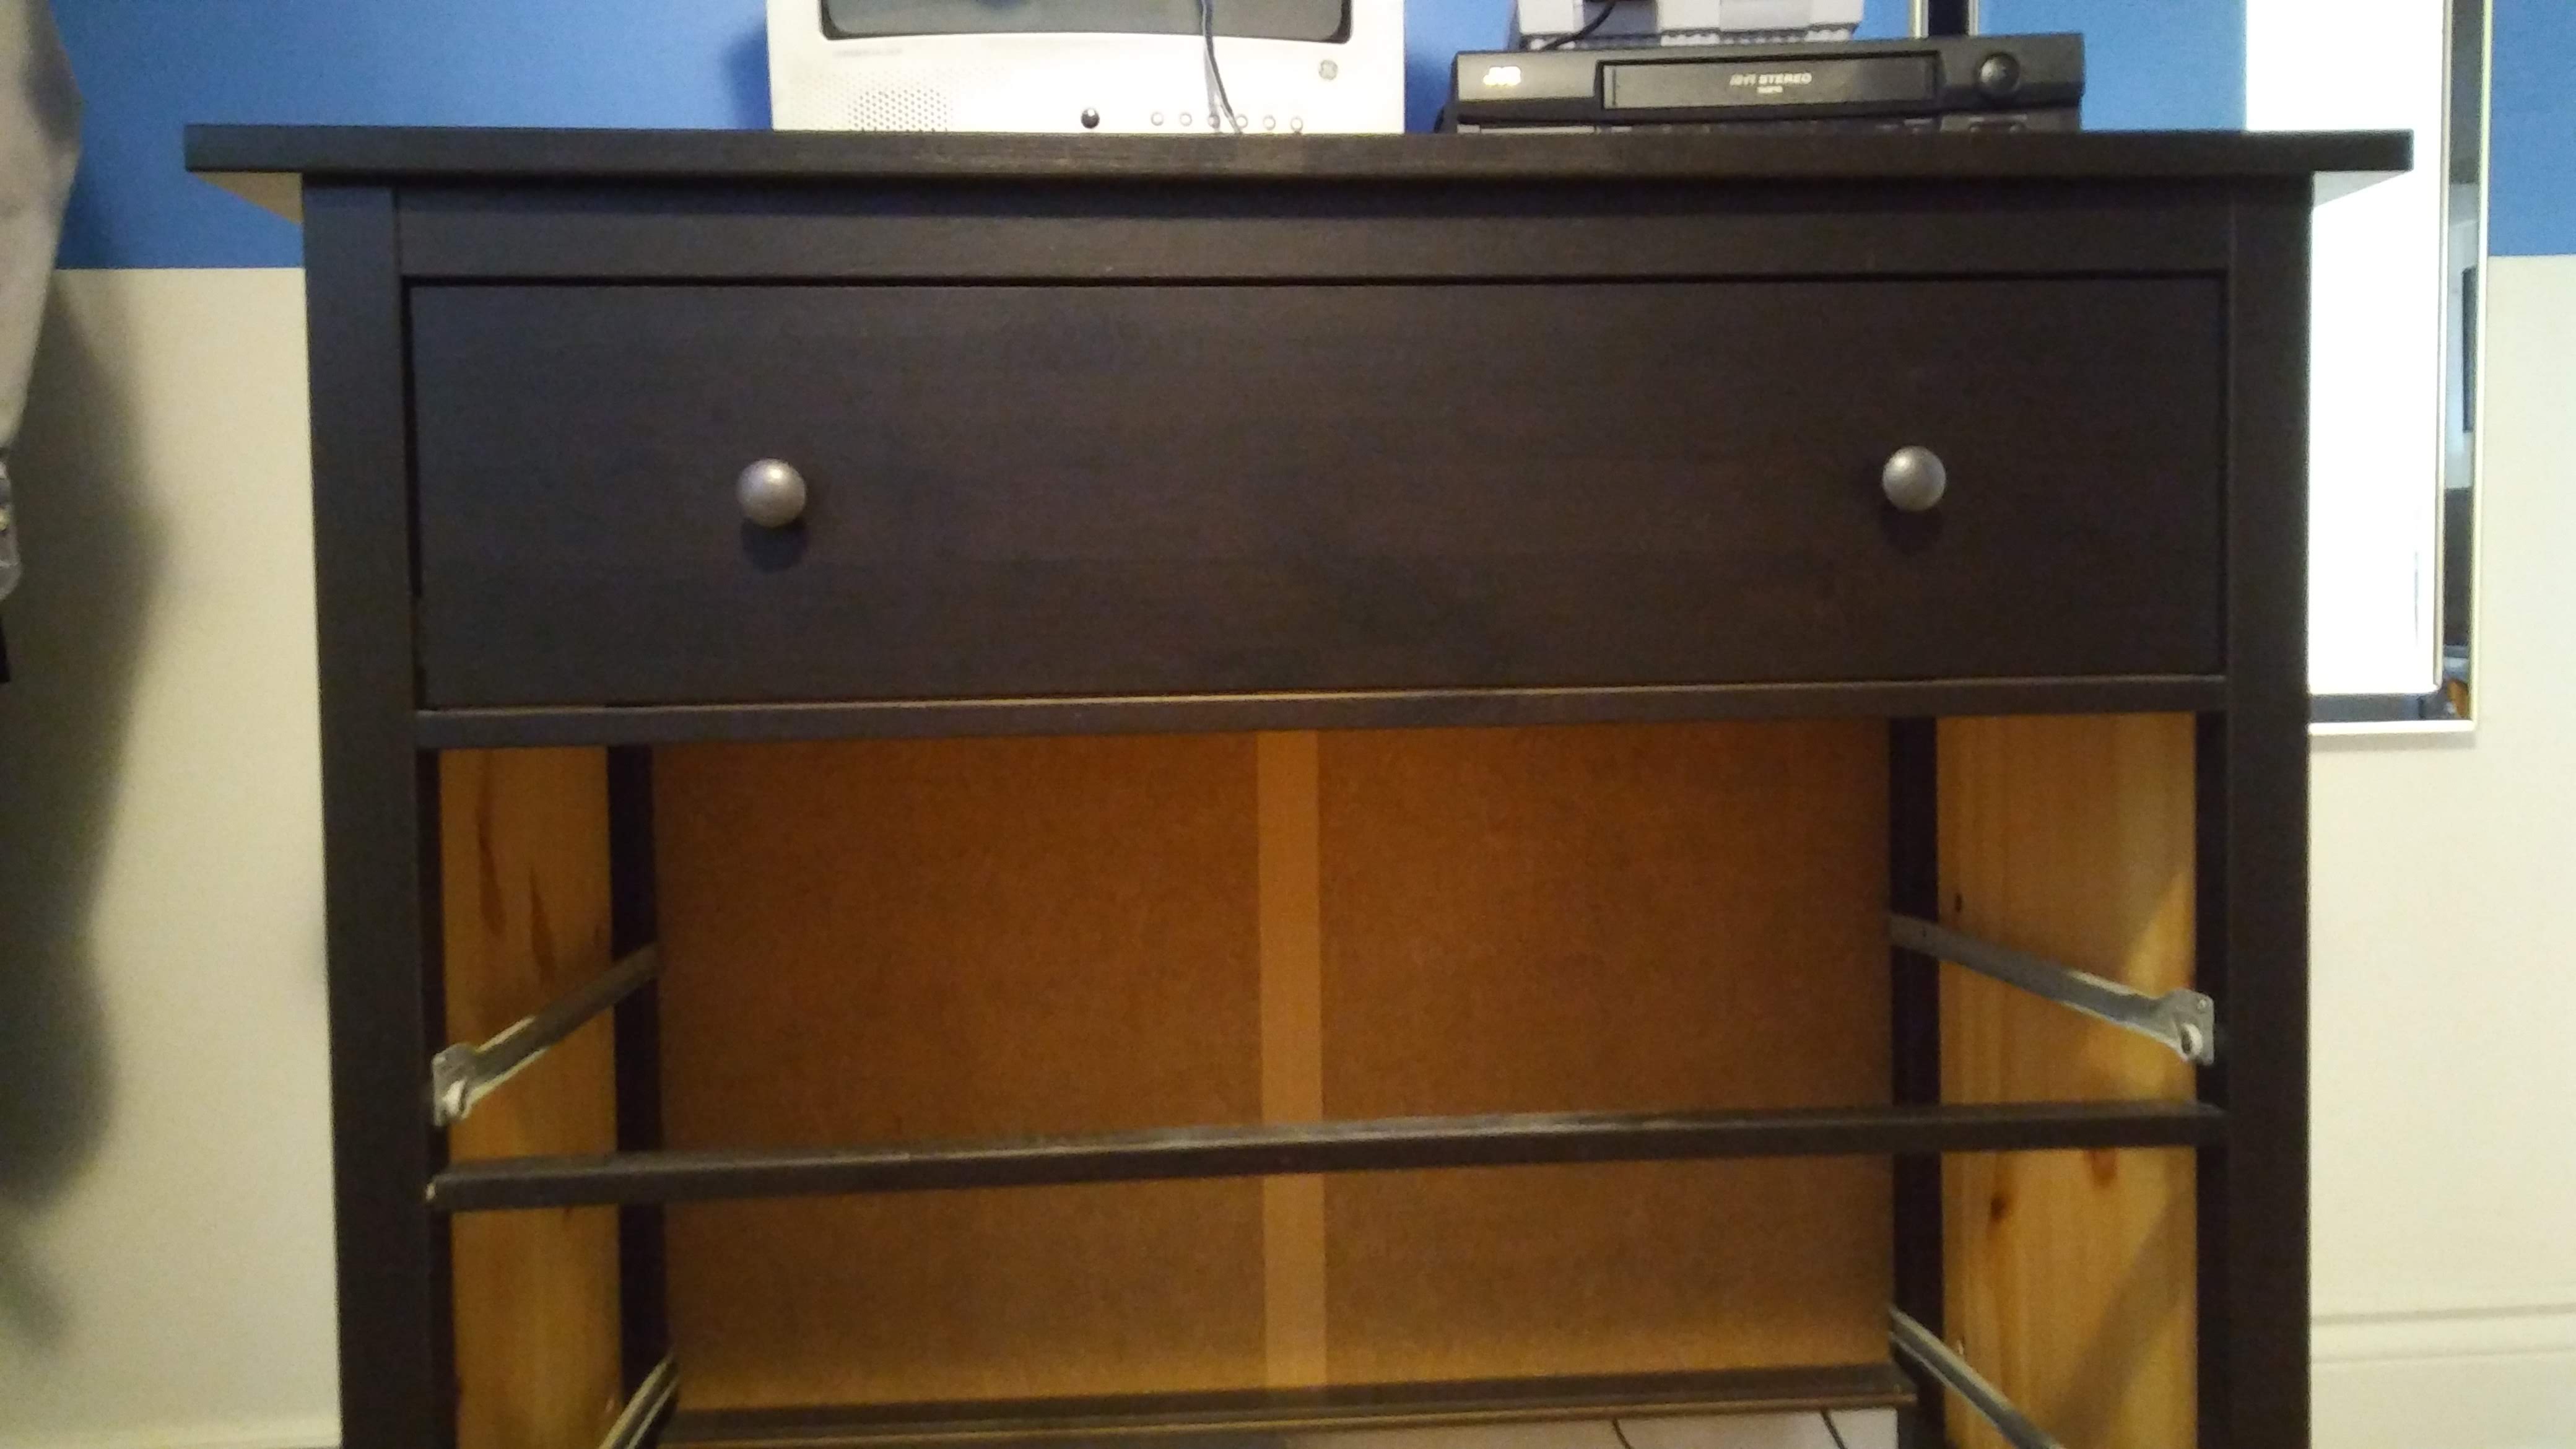 Repairing My Ikea Dresser, Replacement Drawer For Ikea Malm Dresser